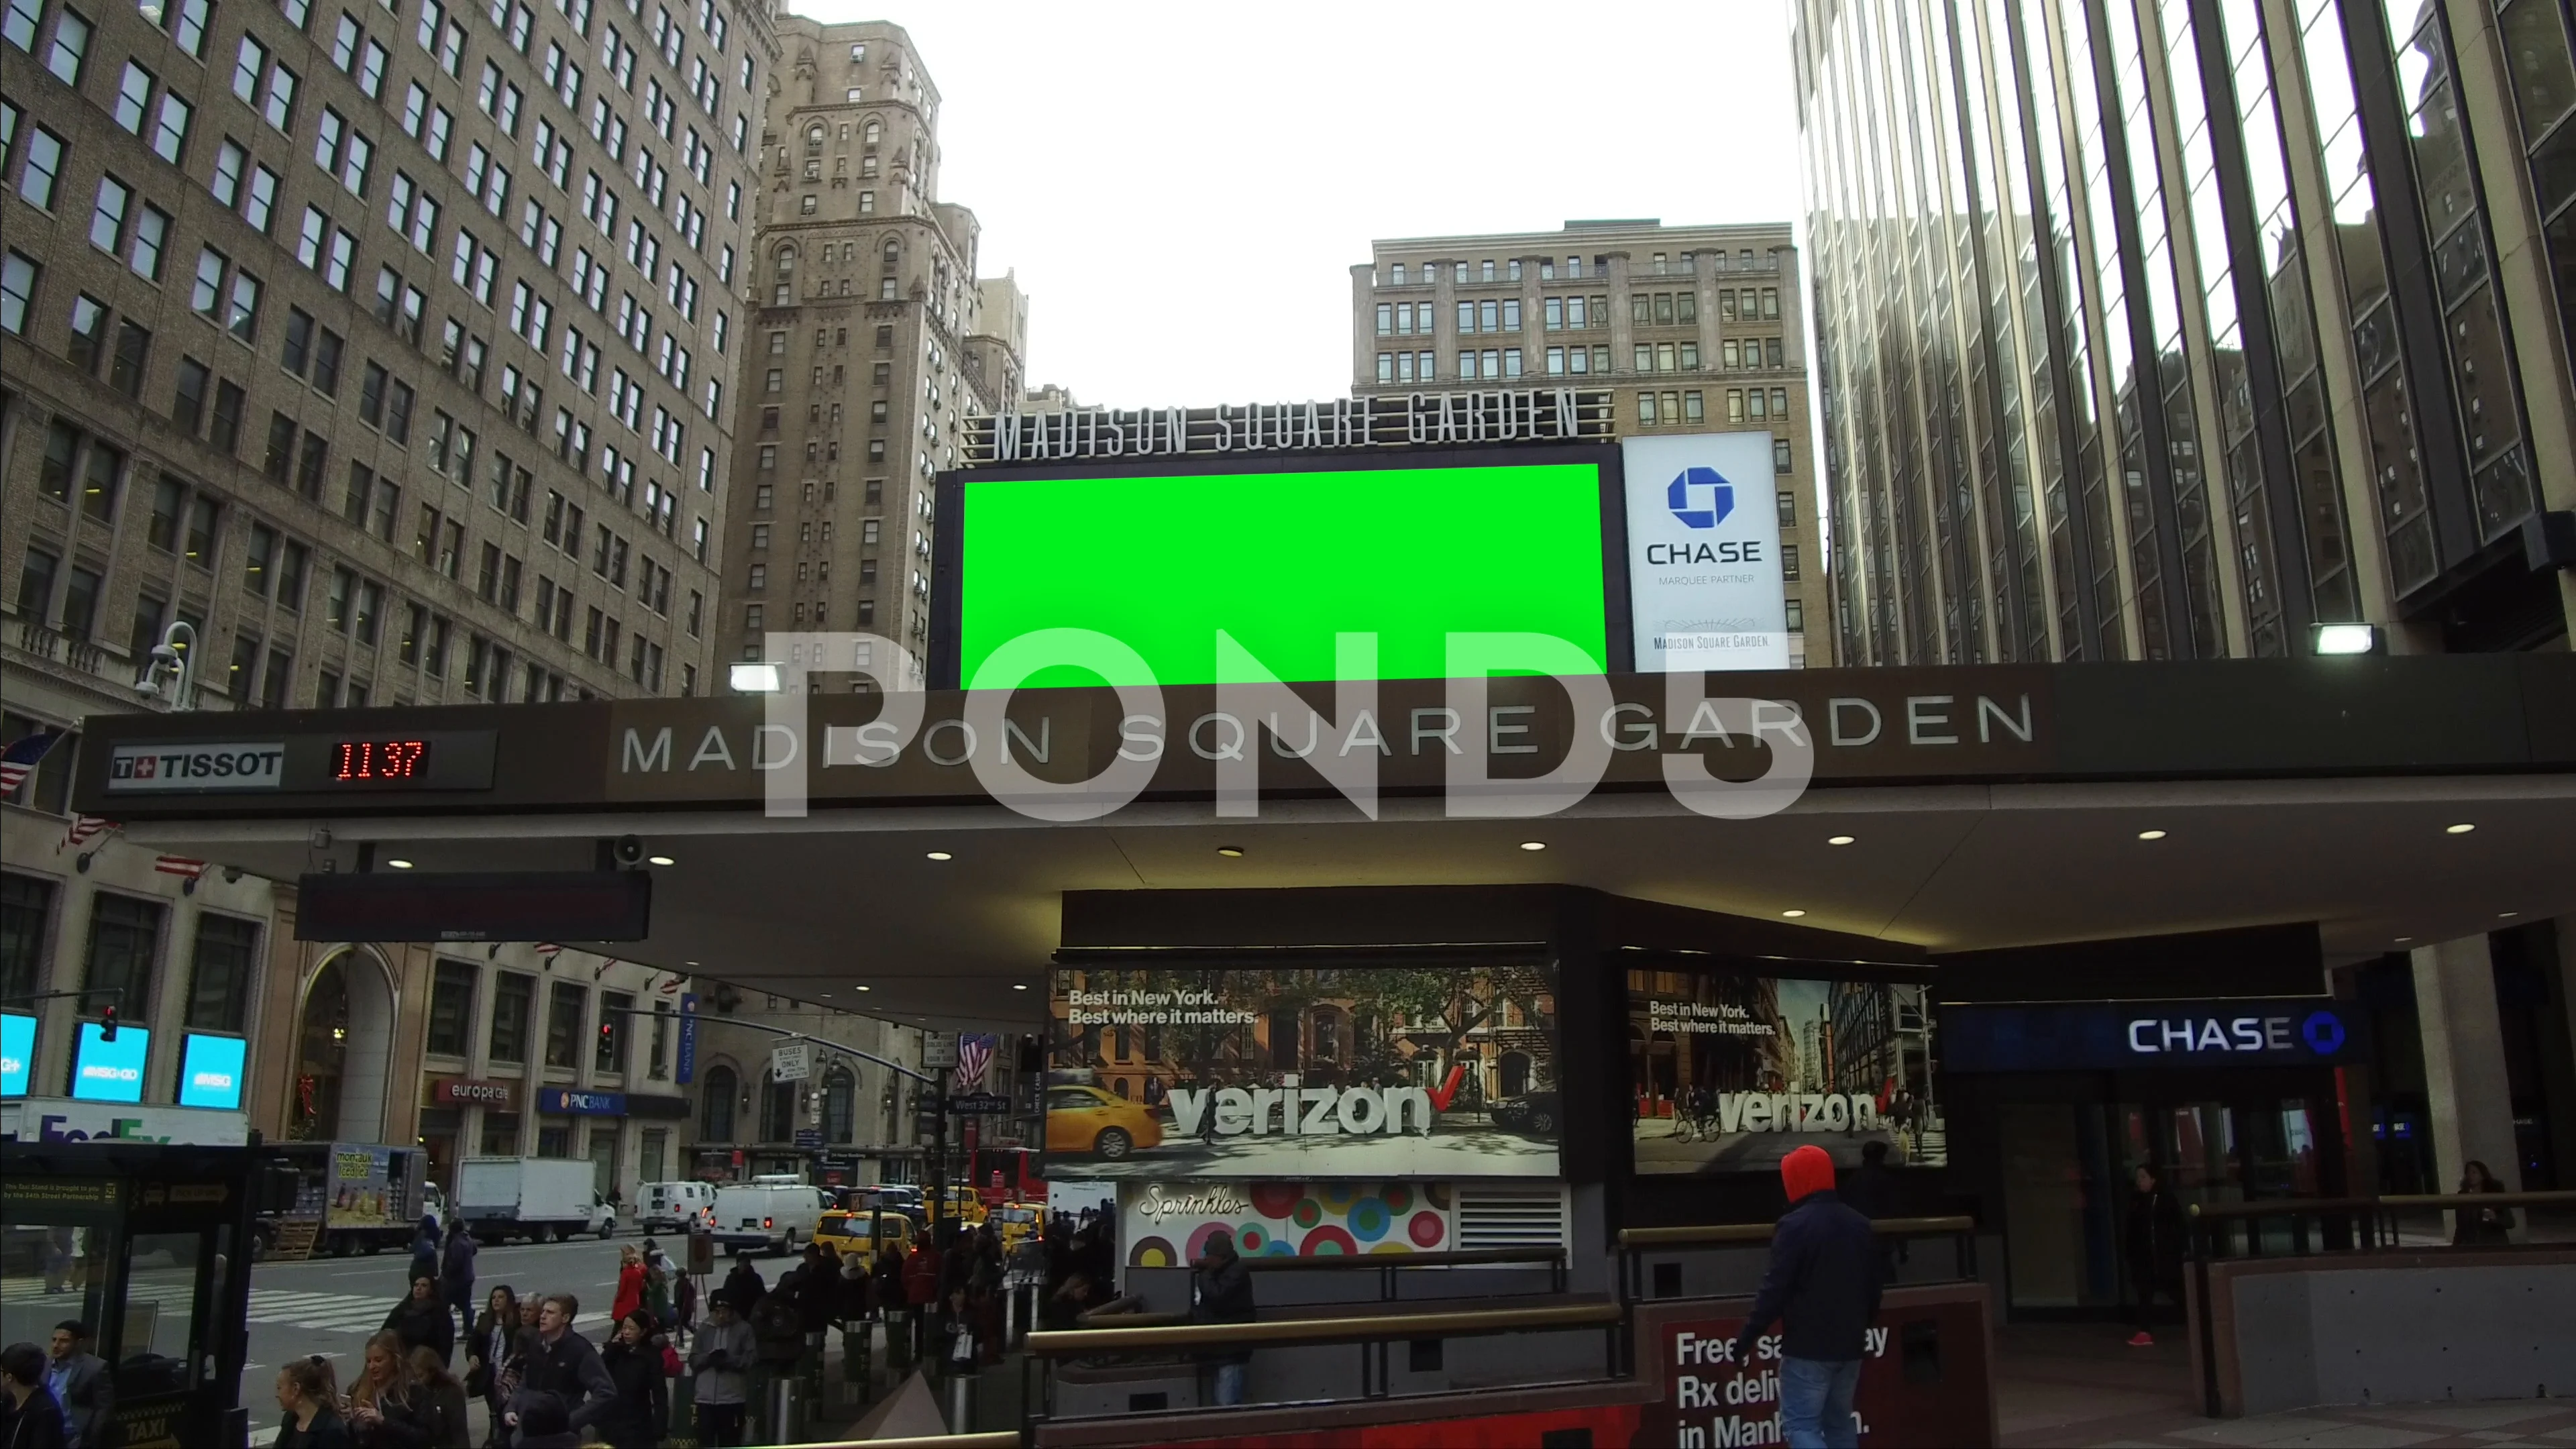 Madison Square Garden Signage Entrance Green Screen No Audio